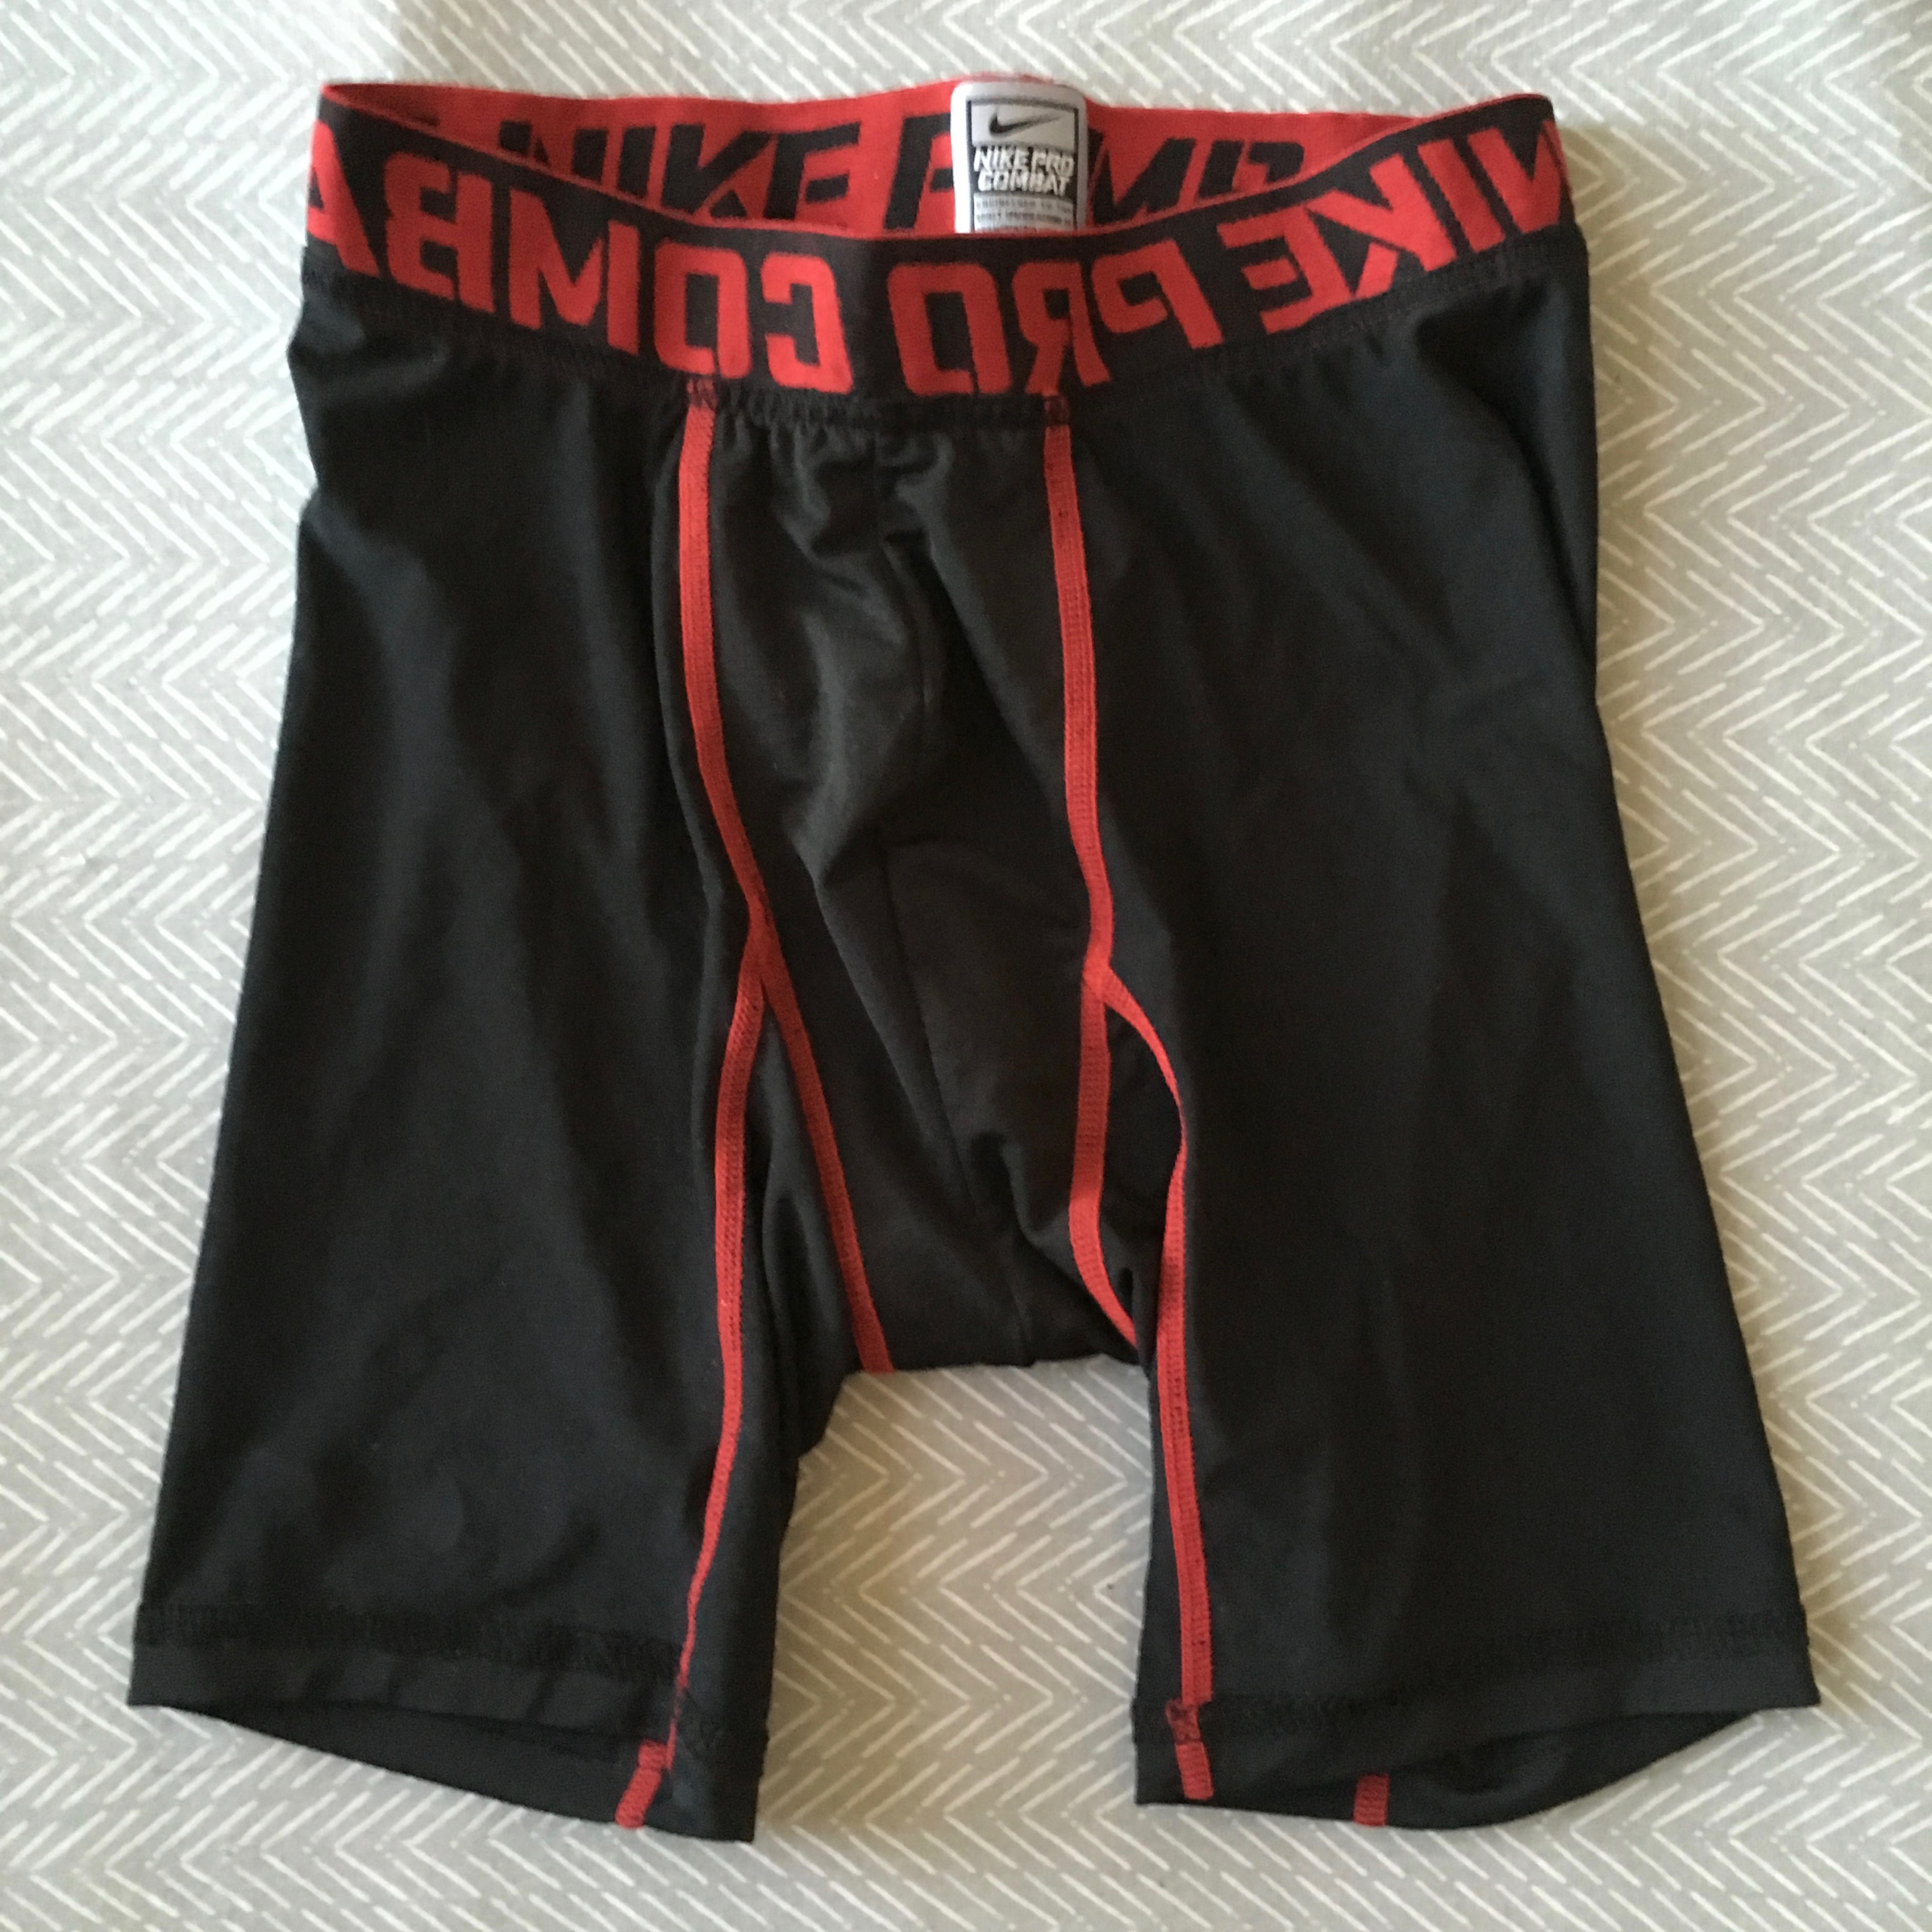 black/red NIKE pro combat compression shorts